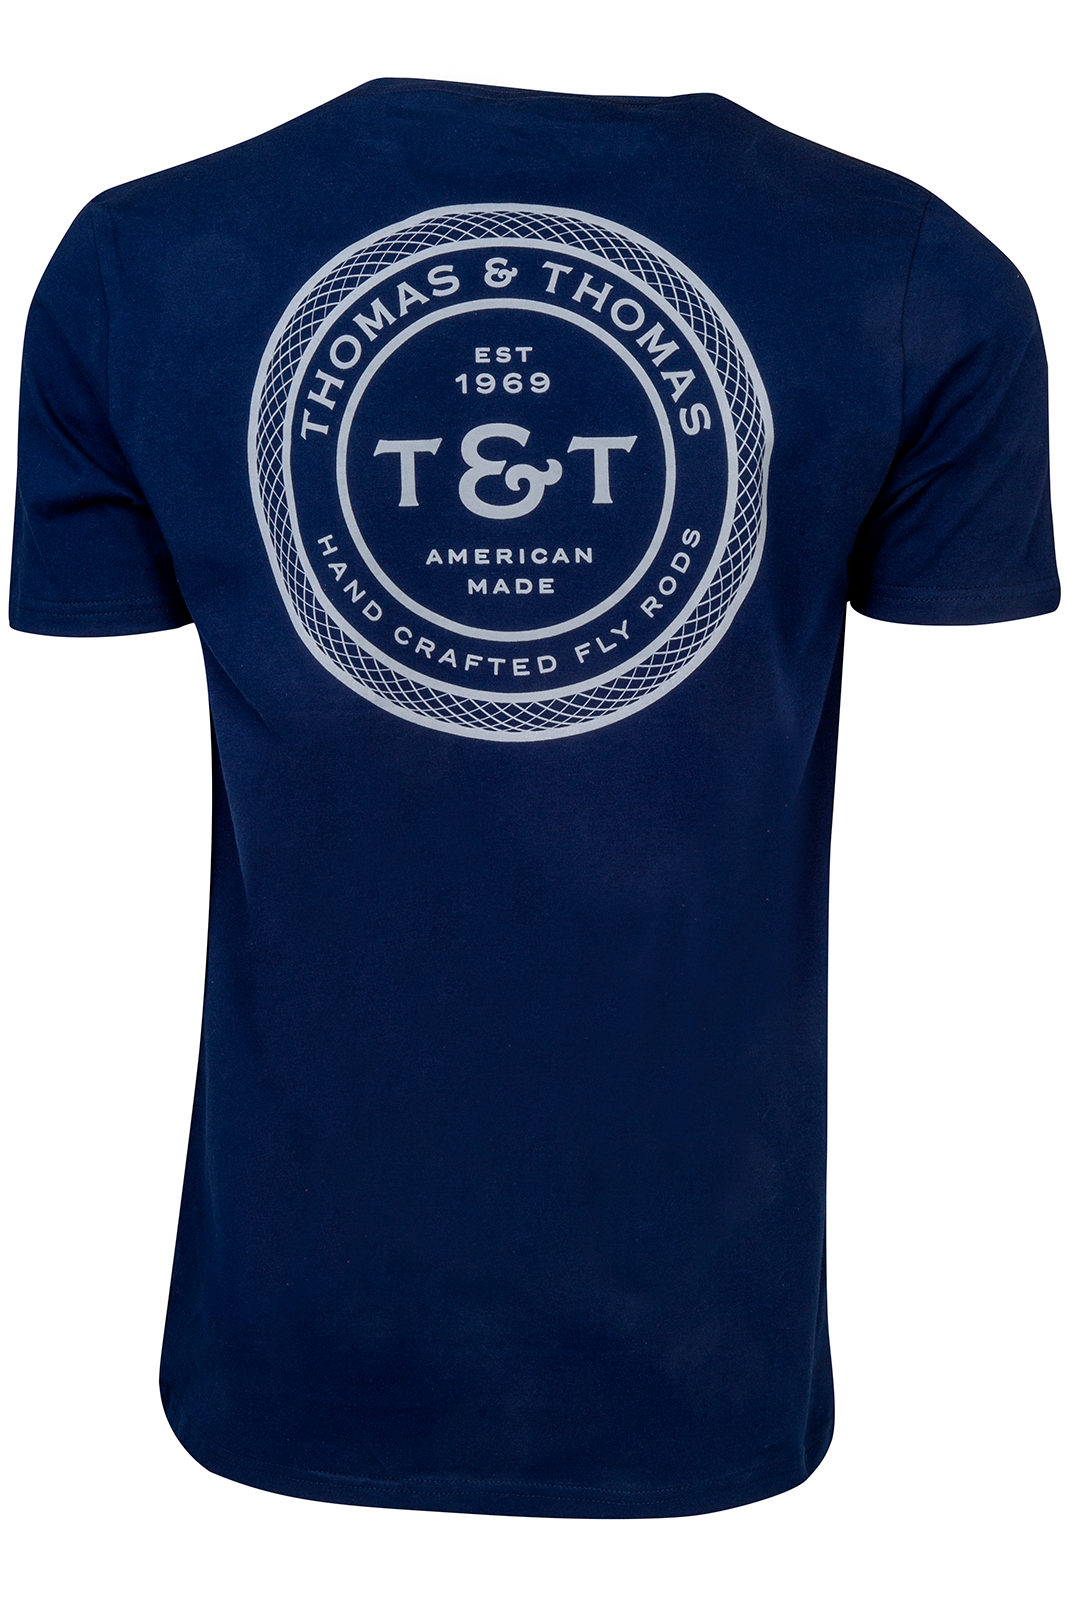 T&T Signature & Blue Thomas - Thomas Pocket – T-Shirt Navy